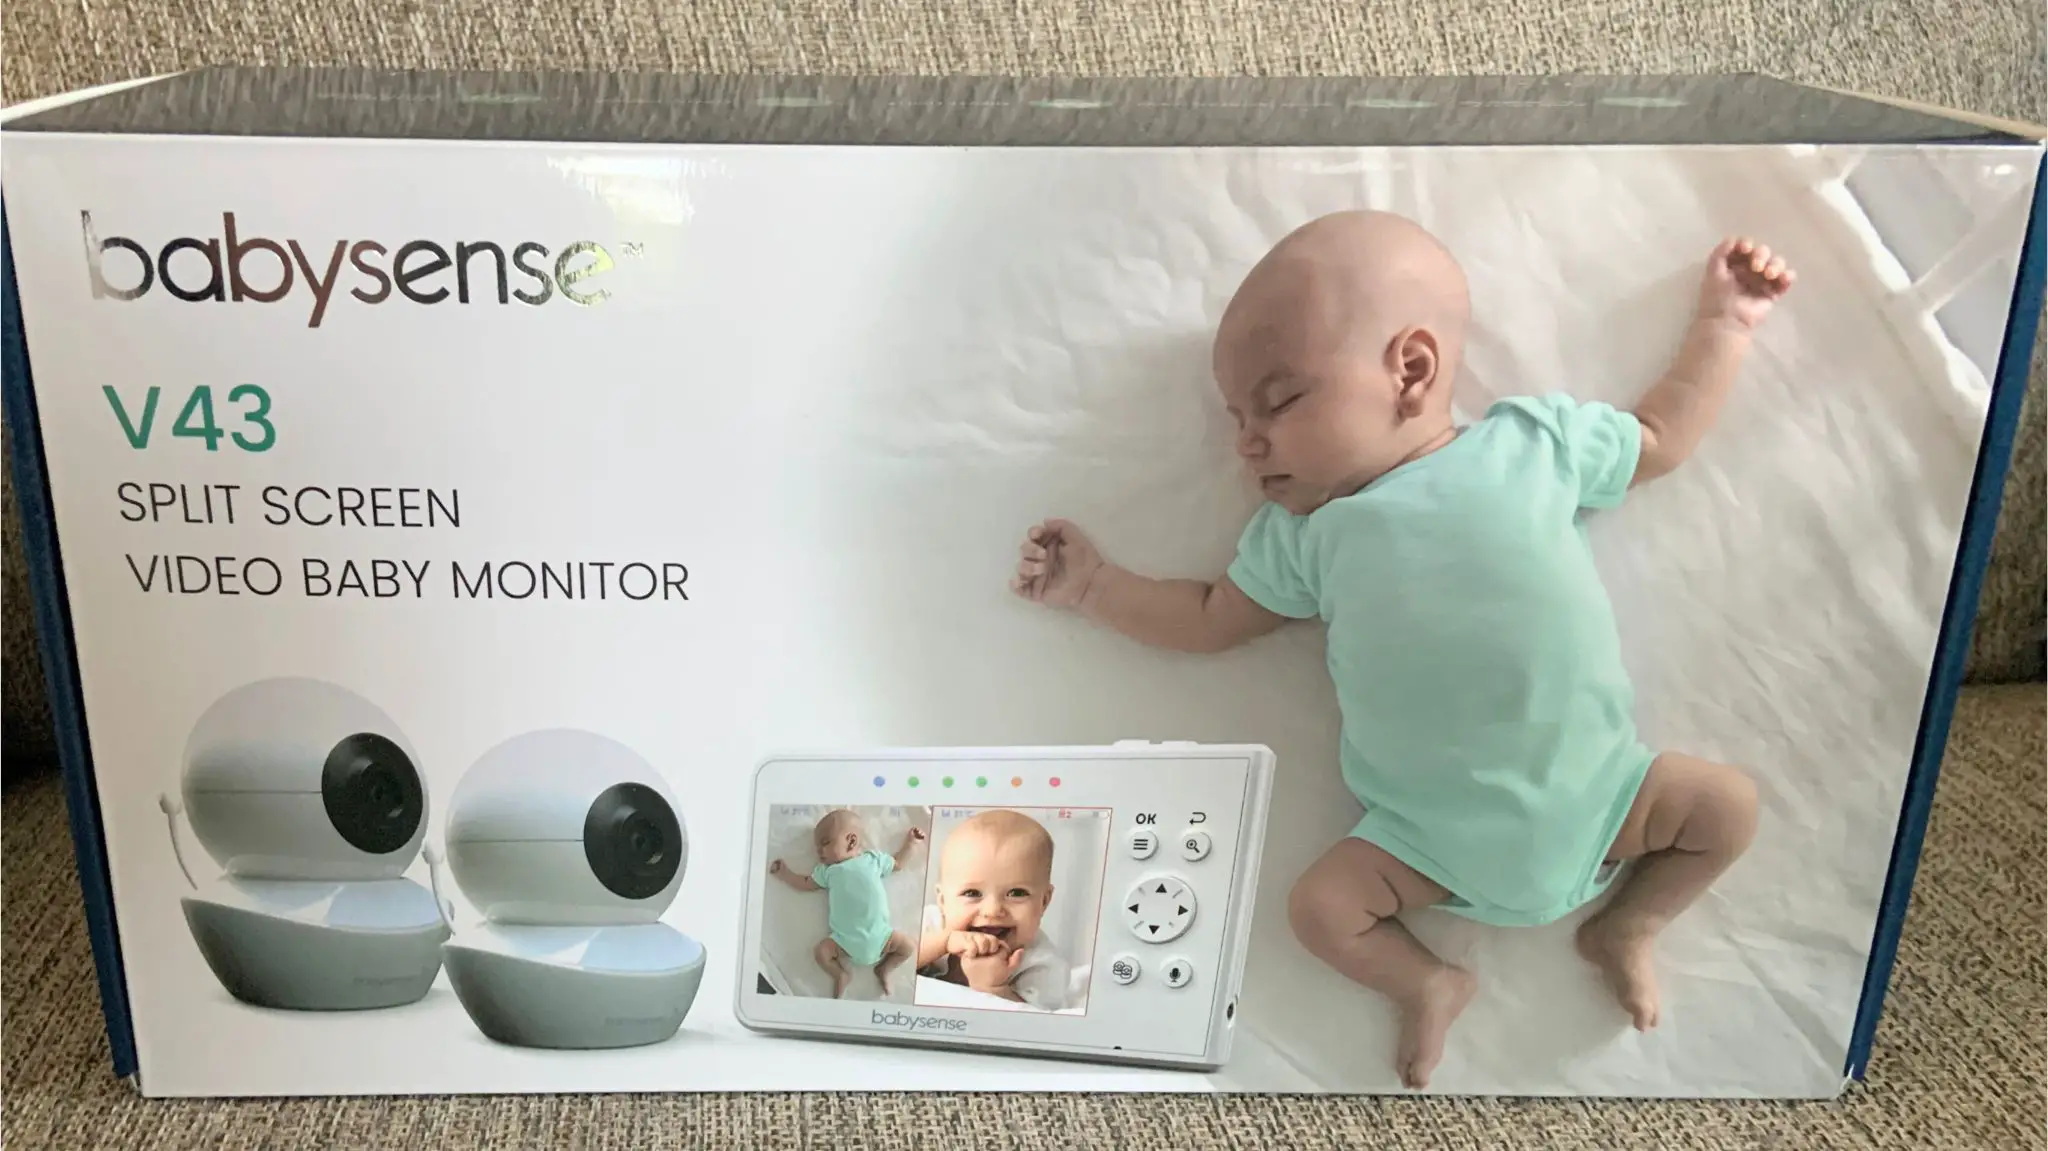 Babysense V43 Split Screen Baby Monitor Review (Pros & Cons)